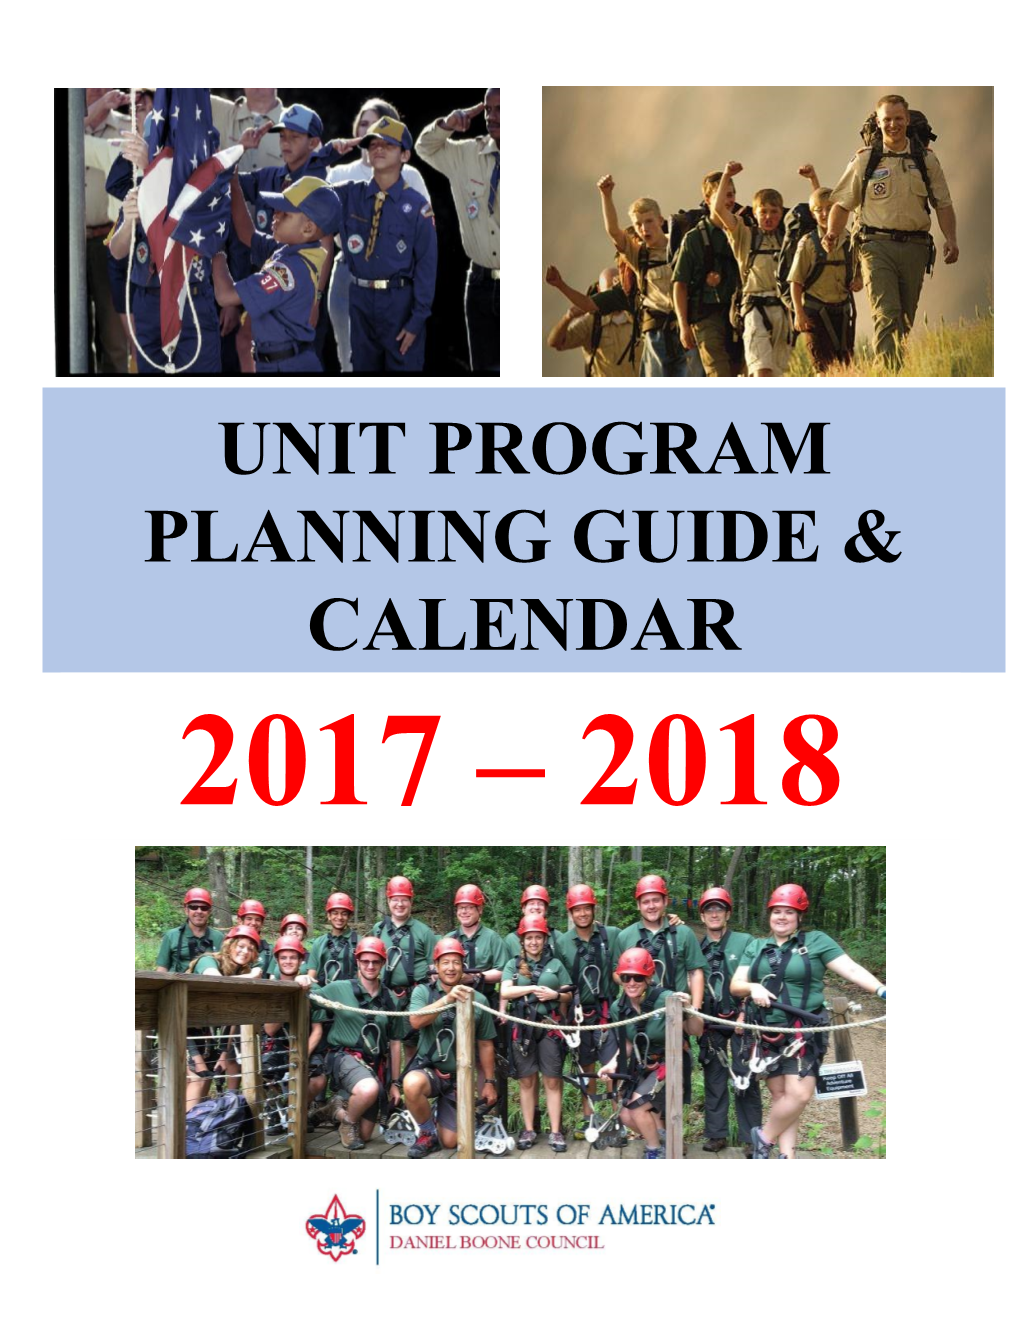 Daniel Boone Council Planning Calendar & Guide